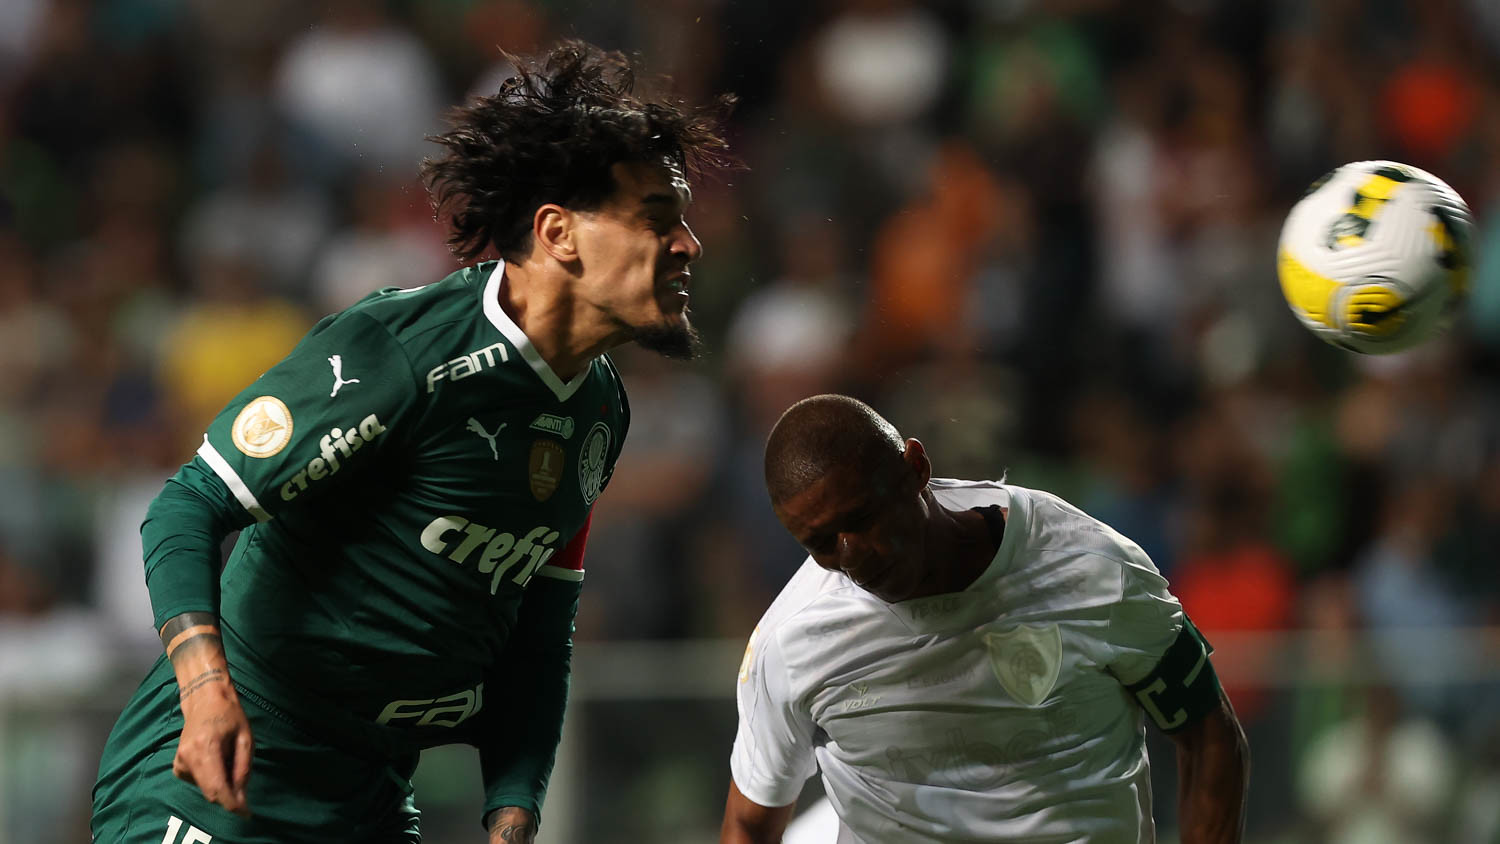 Foto: Cesar Greco / Palmeiras